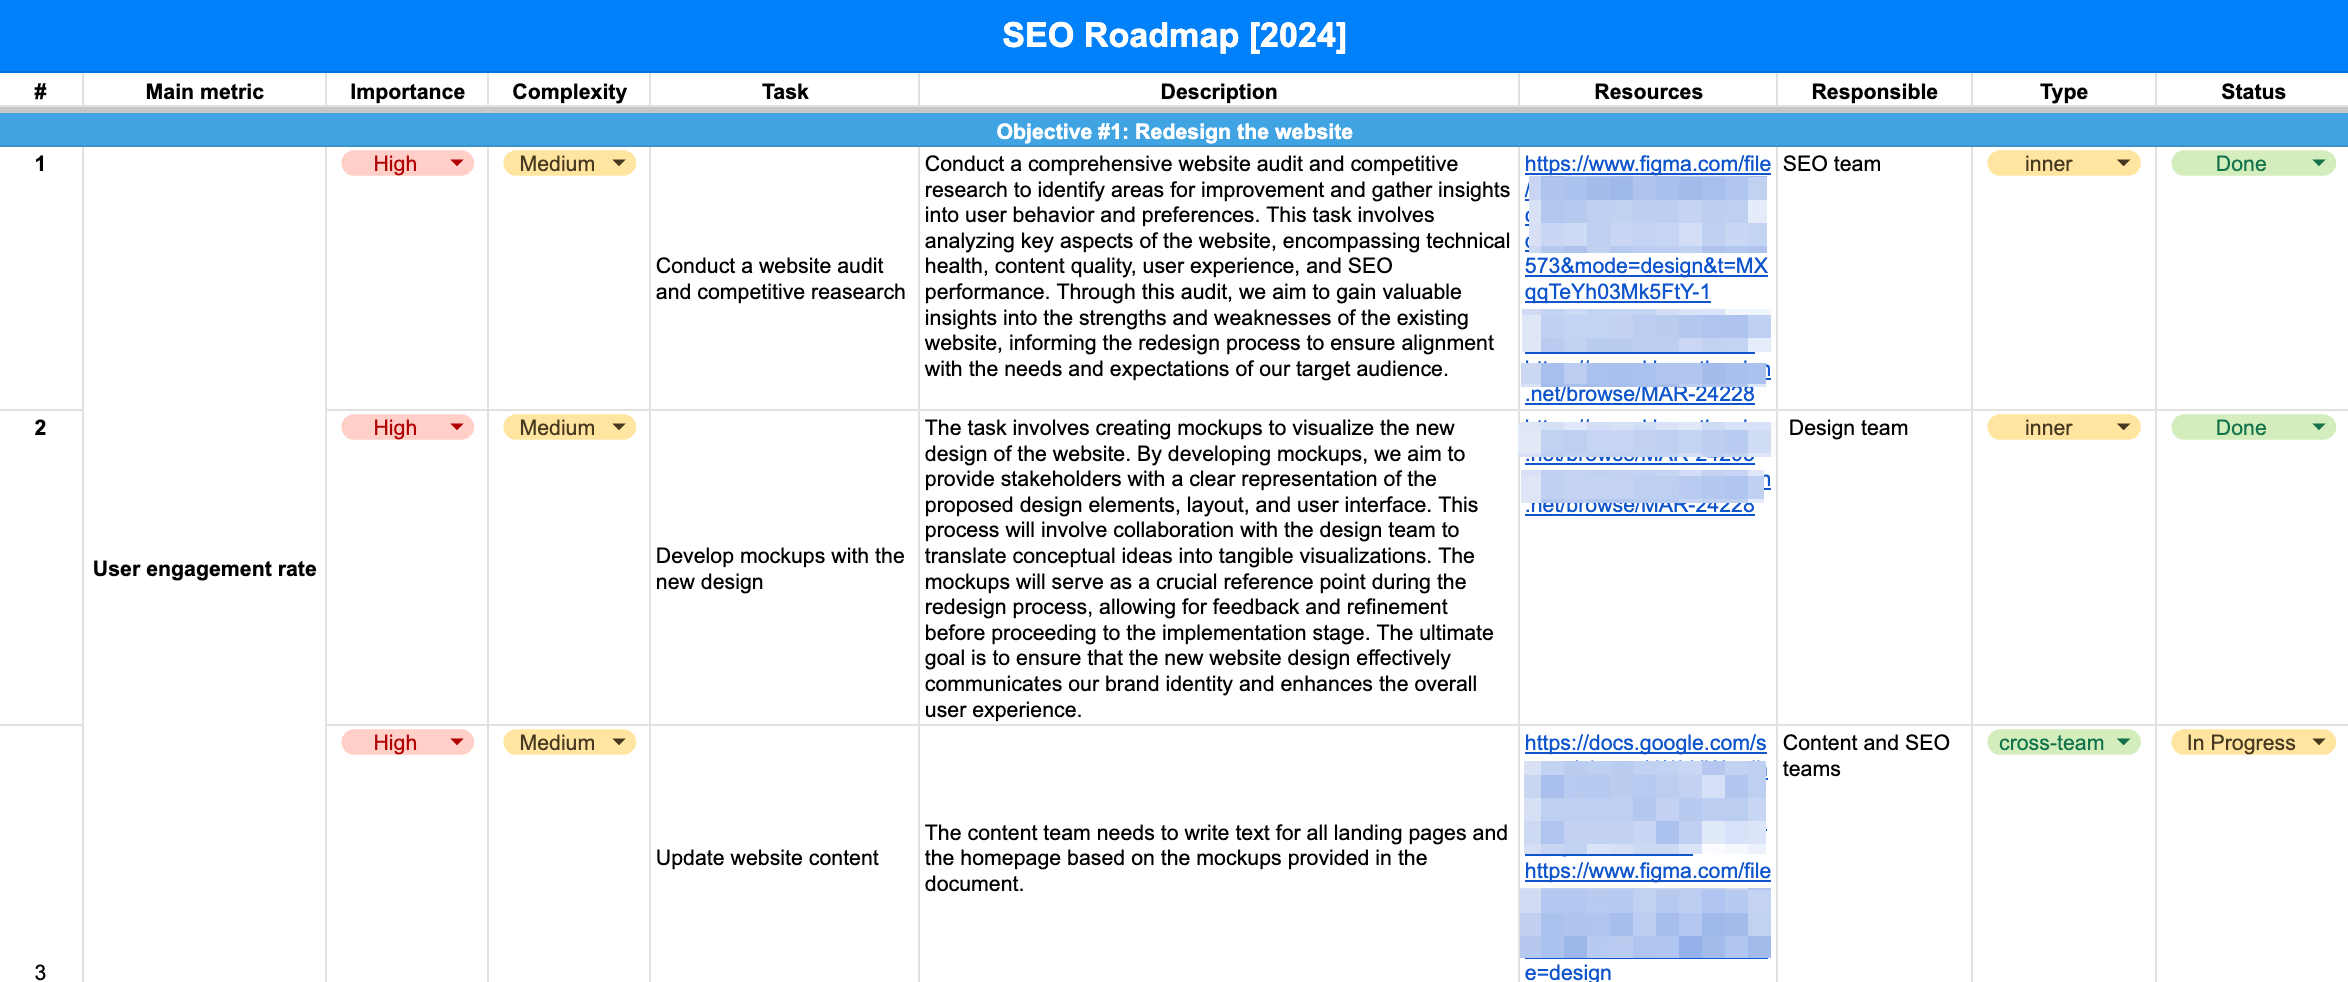 SE Ranking’s SEO roadmap template